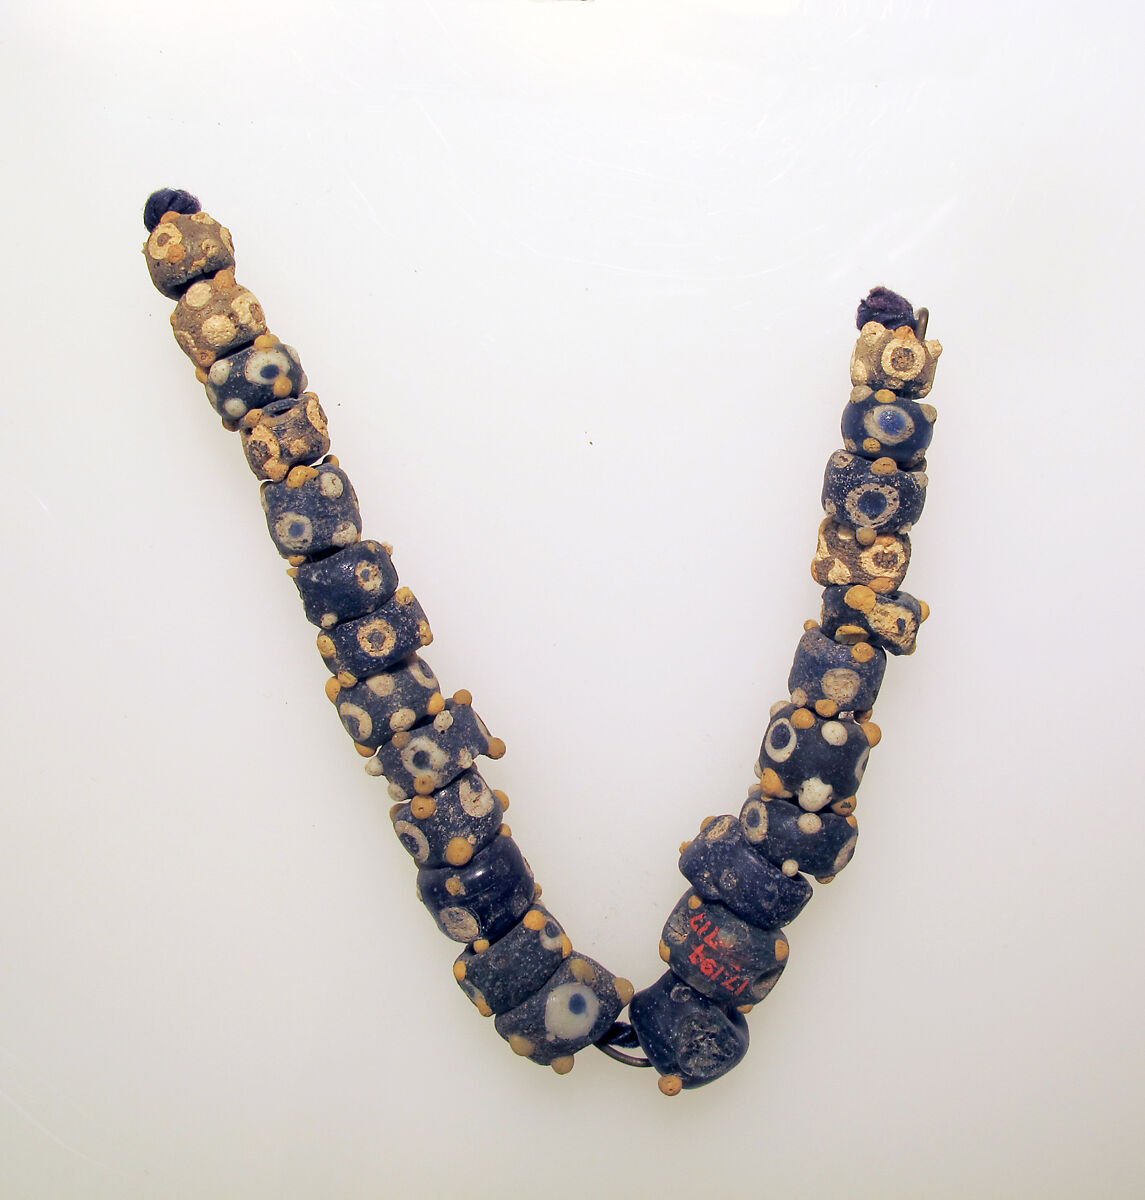 Glass eye beads, Glass, Phoenician or Carthaginian 